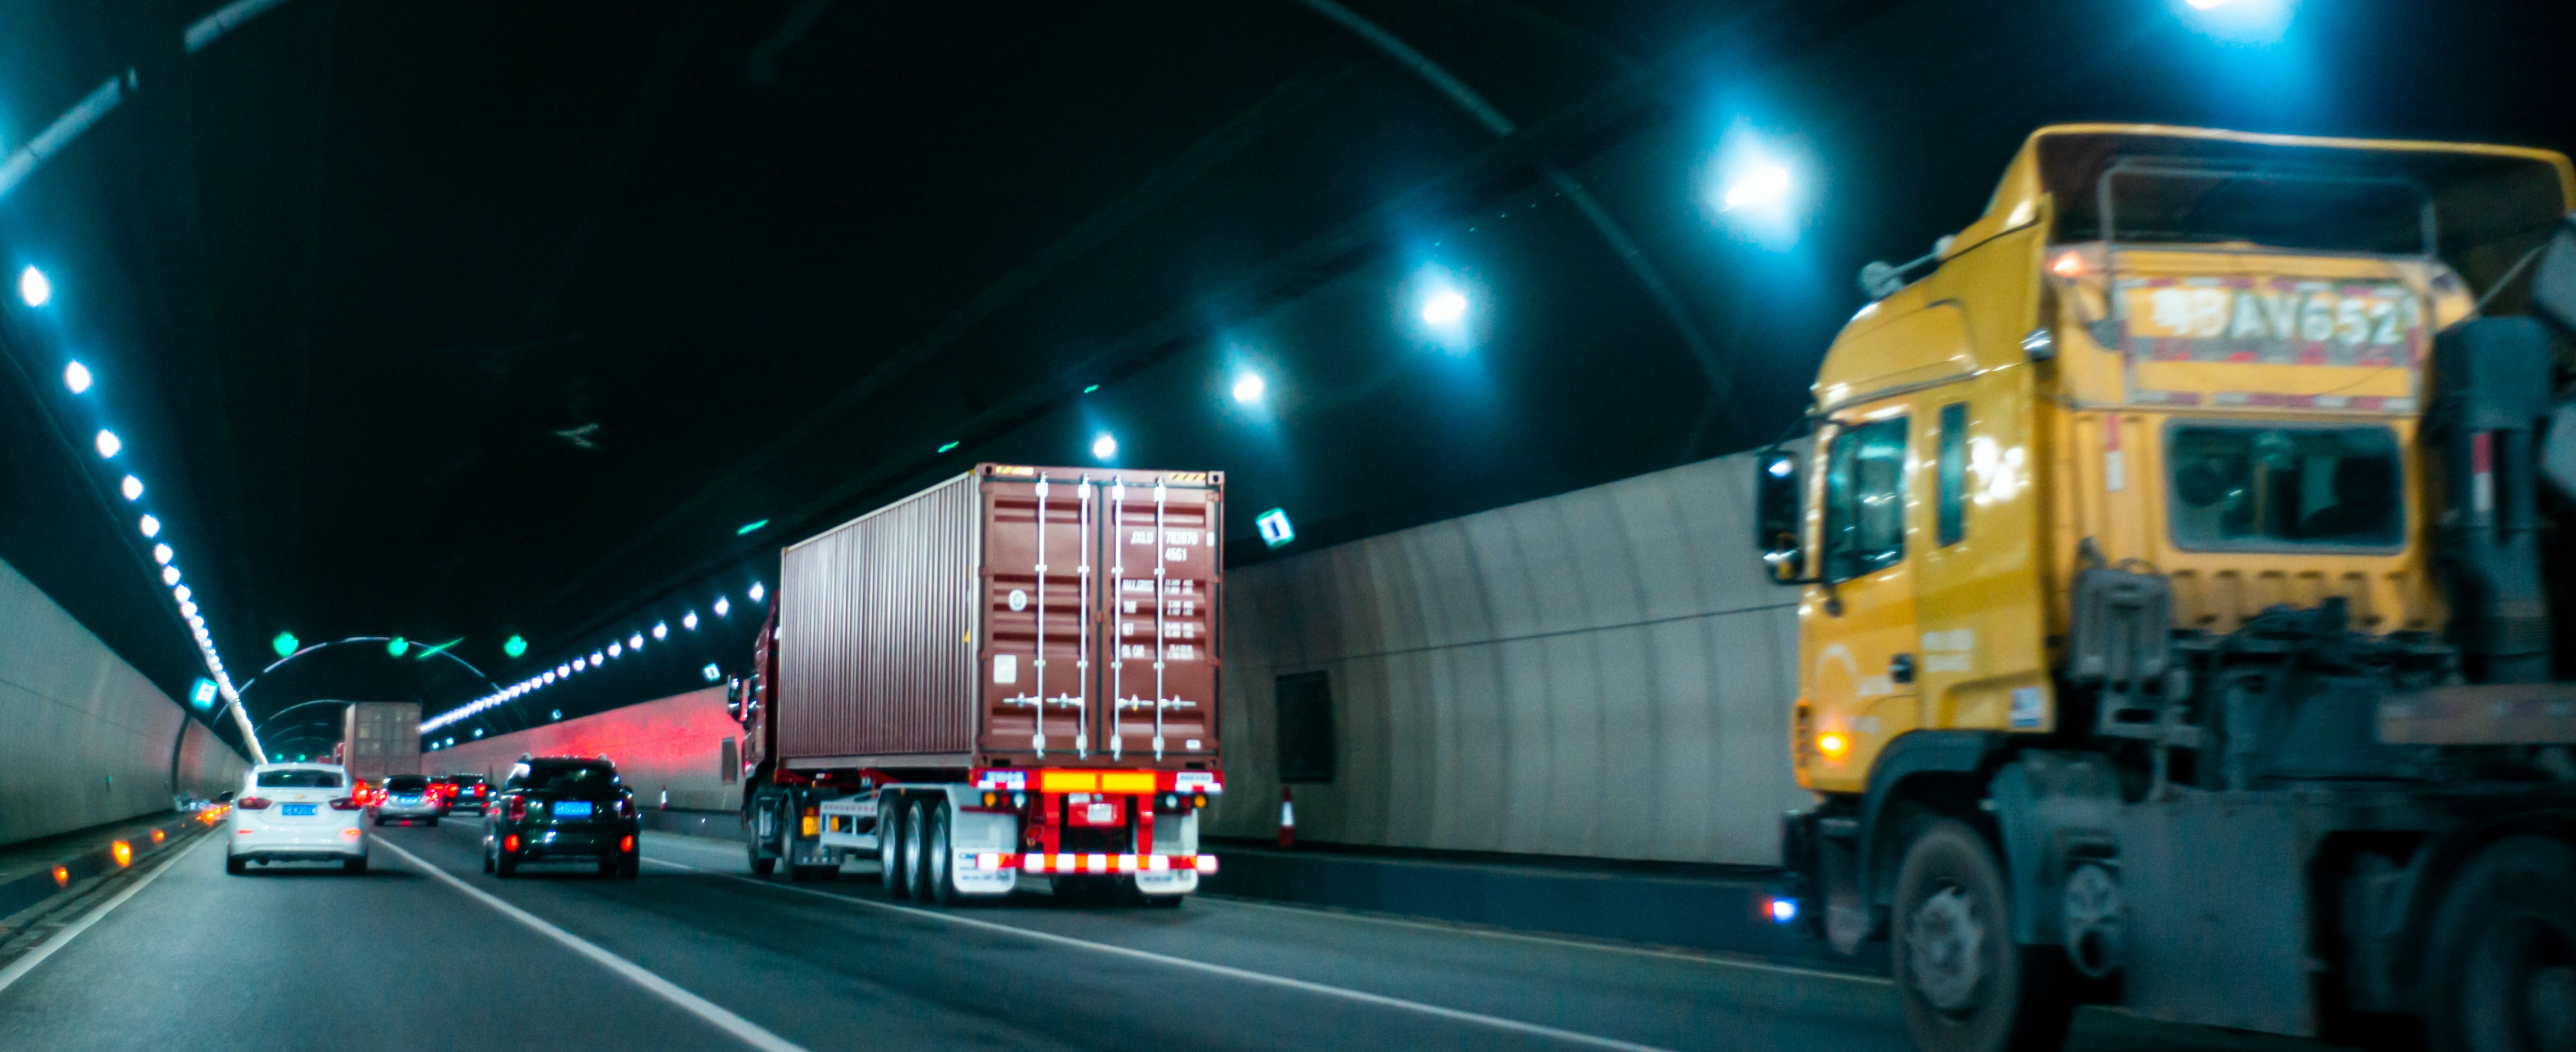 interstate truck movement measured with trucking analytics